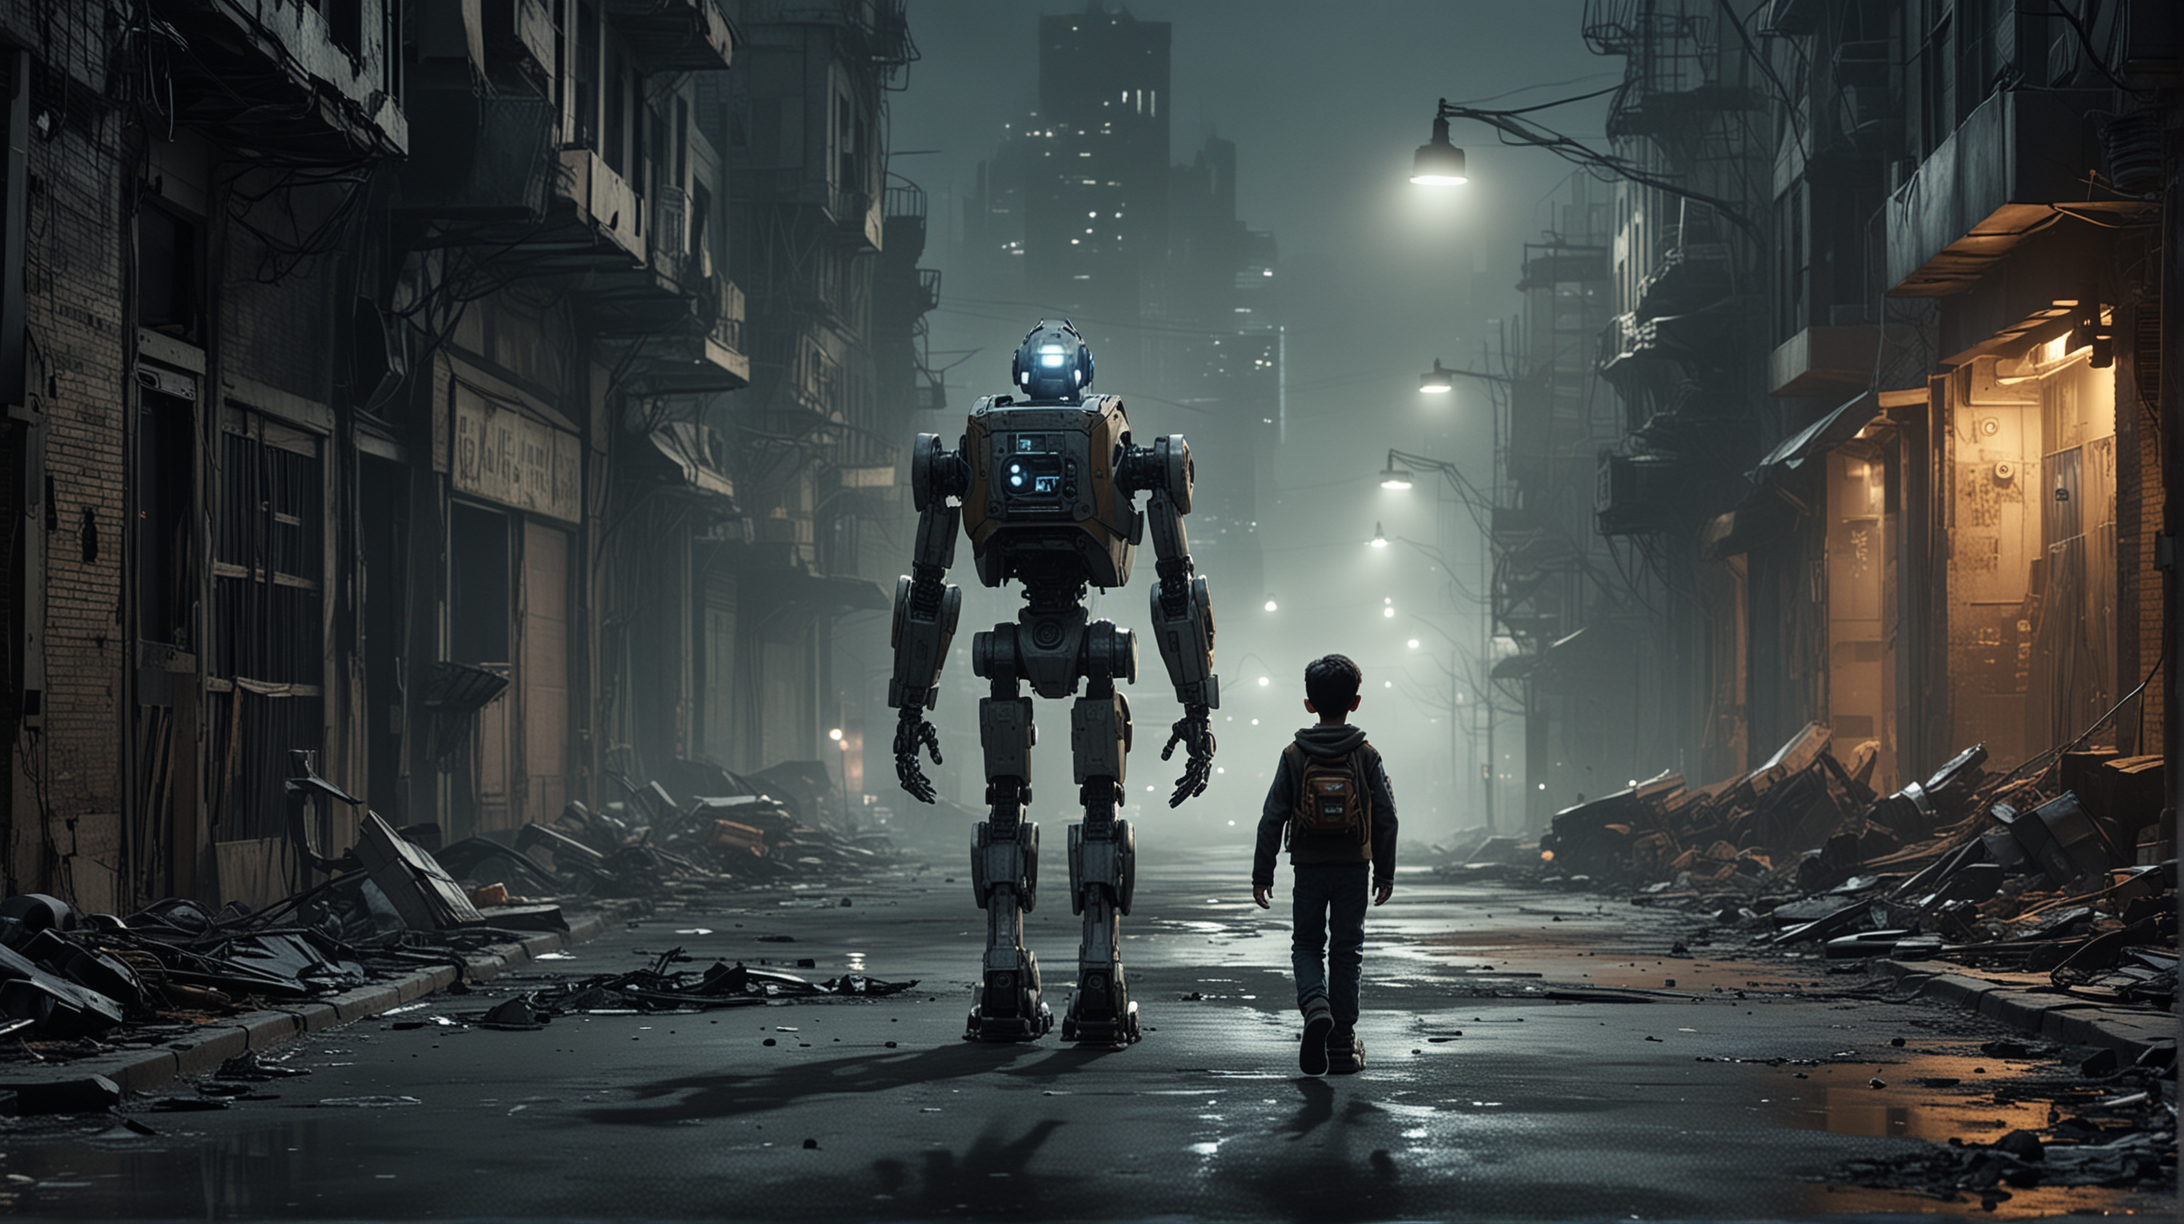 Exploring Dystopian Streets Young Boy and Robot Companion Amidst Shadows